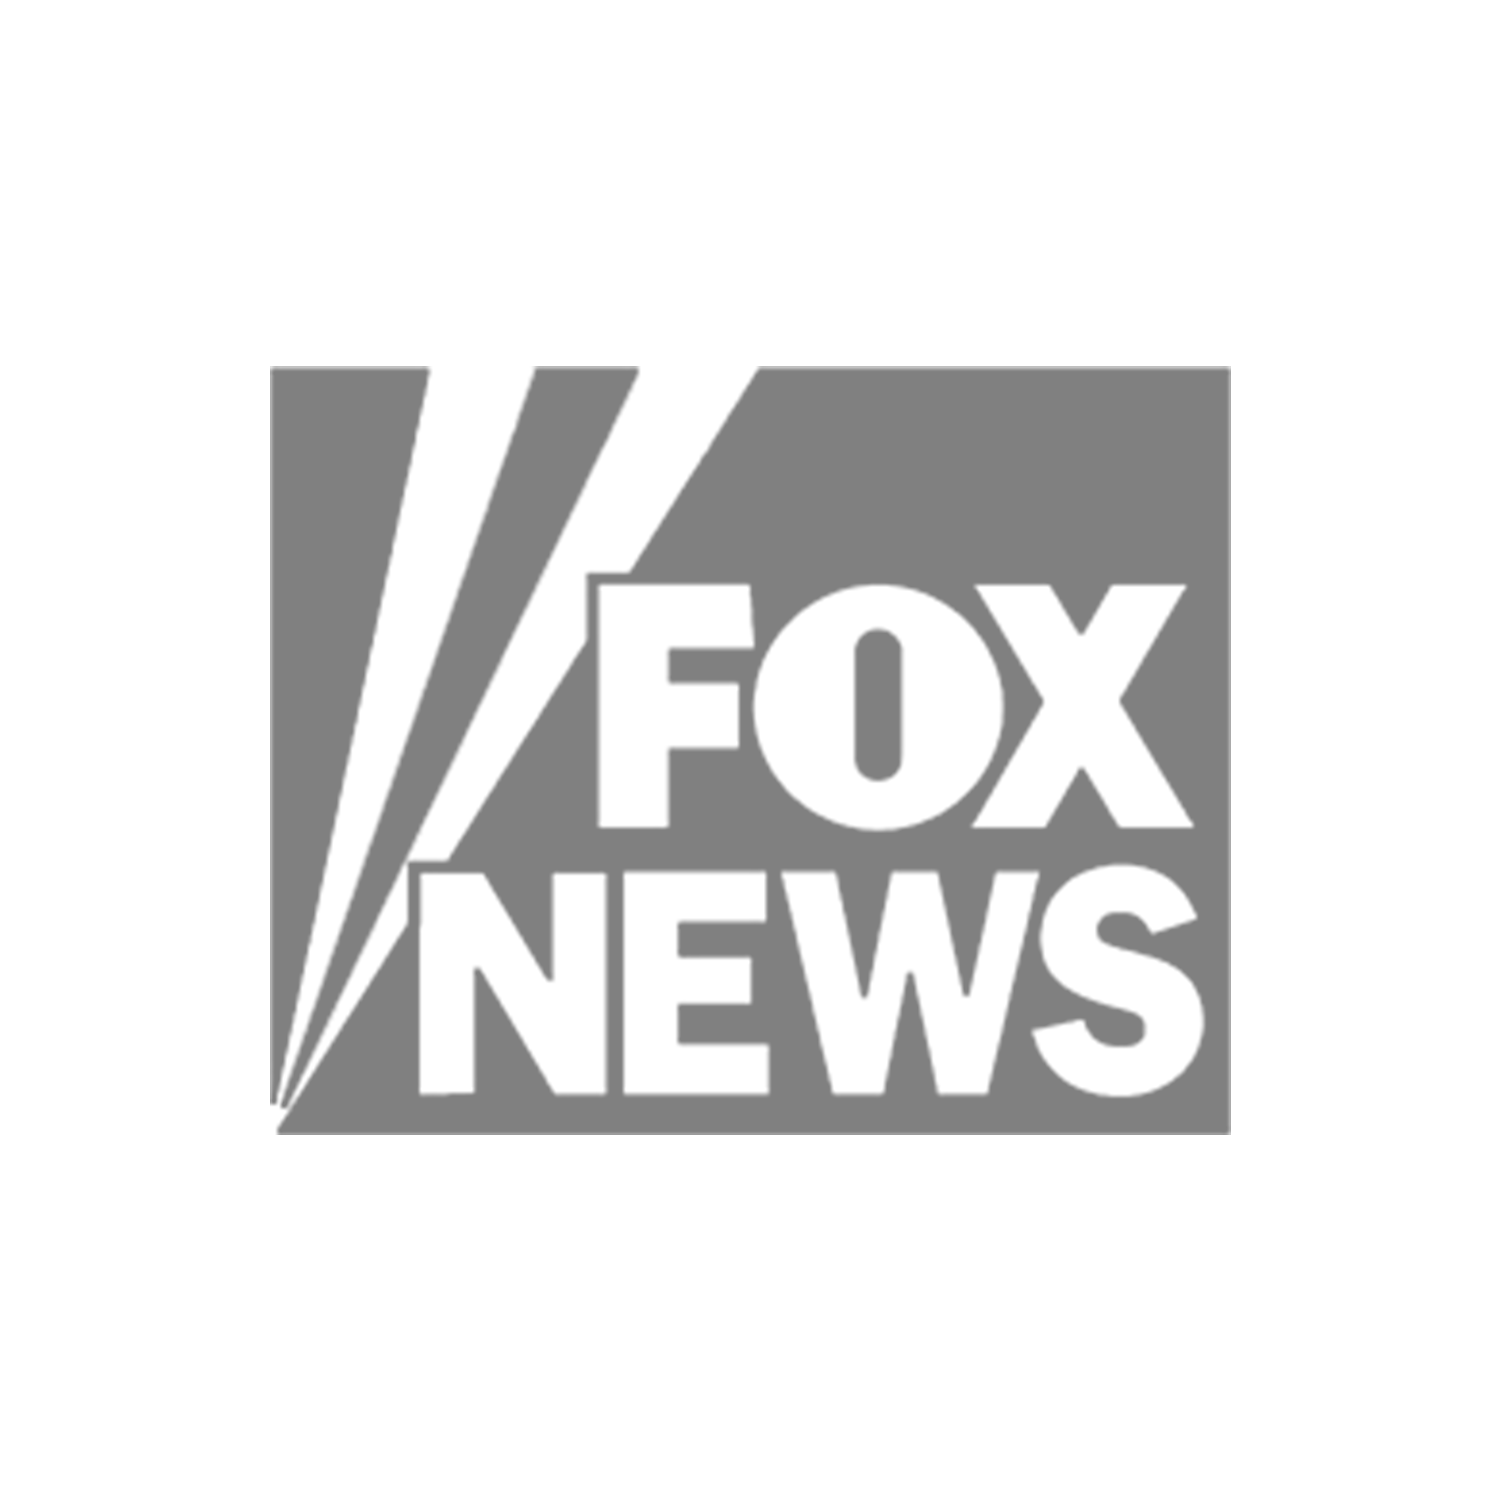 fox-news.png